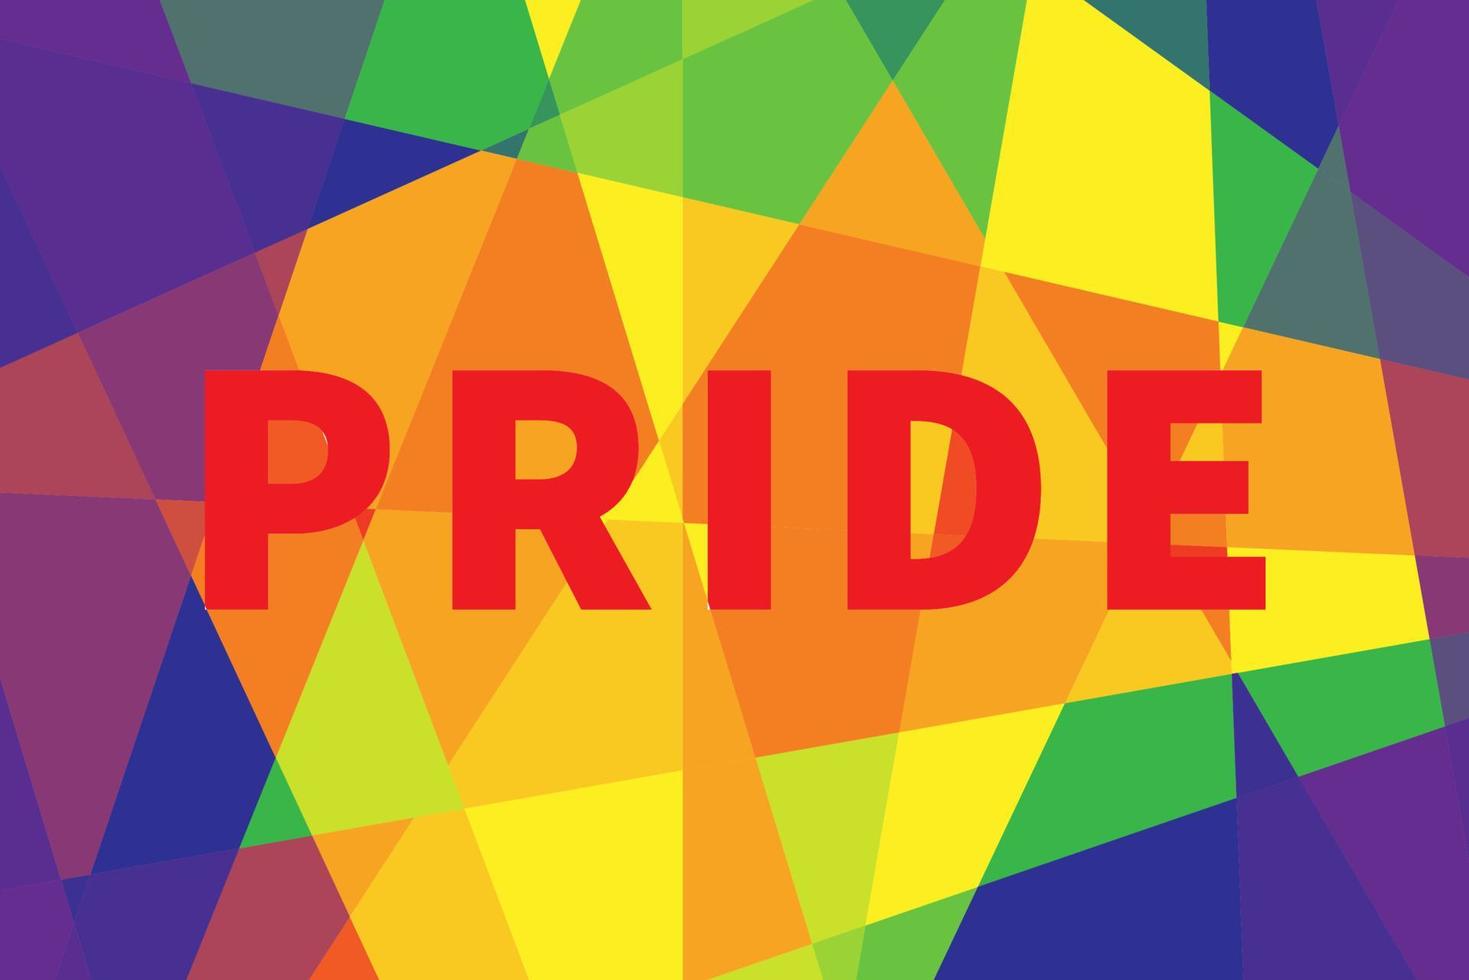 stolzbanner, plakat. geometrischer hintergrund des regenbogens. LGBT-Flagge. Vektor-Illustration. vektor